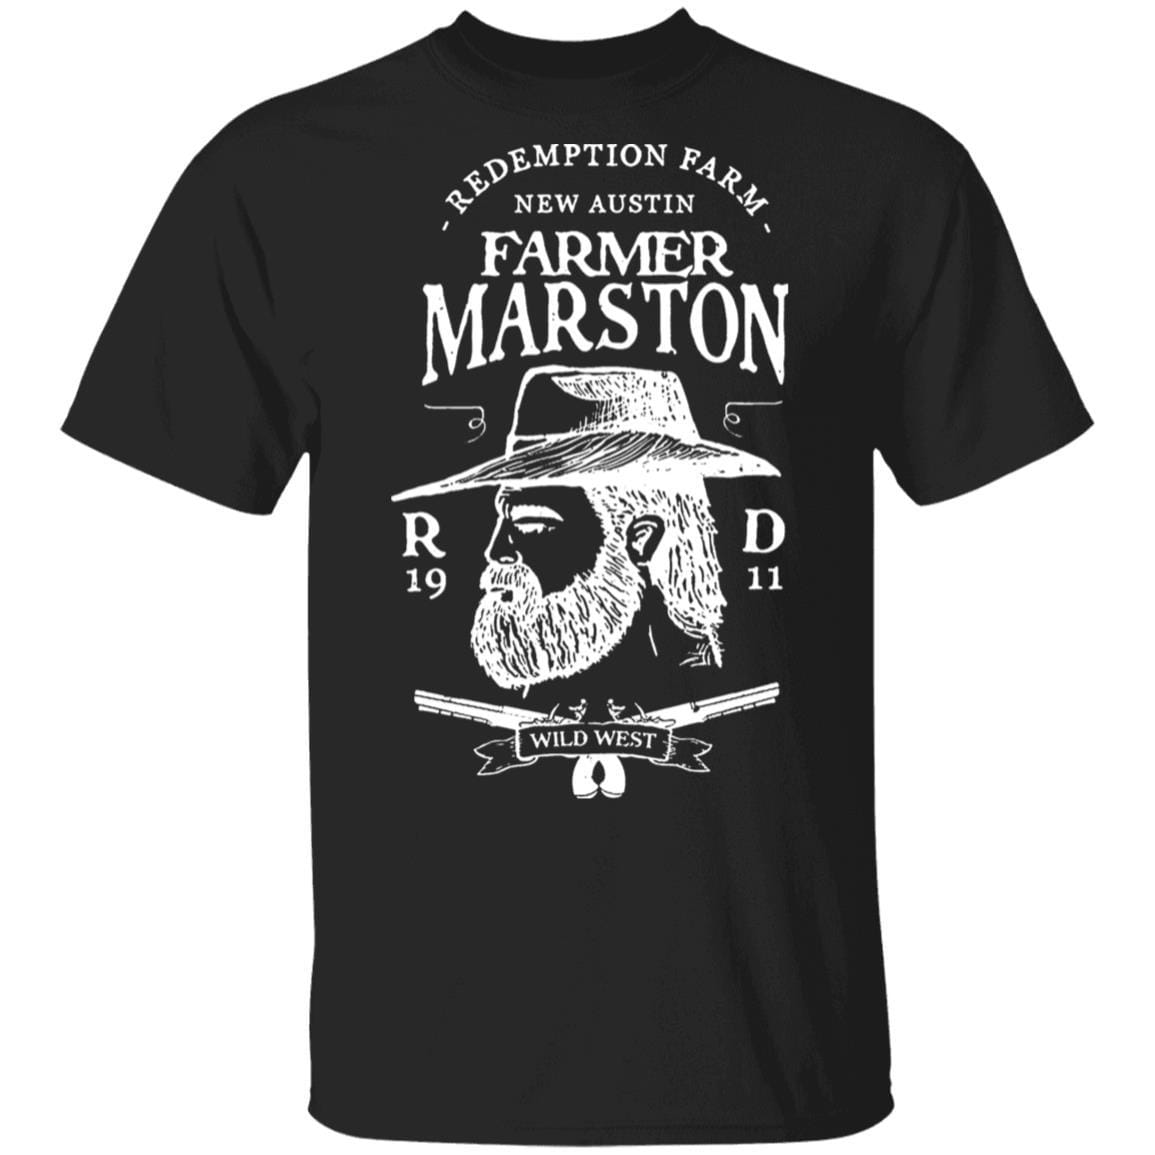 Farmer Marston Redemption Farm New Austin 1911 T-Shirts, Hoodies